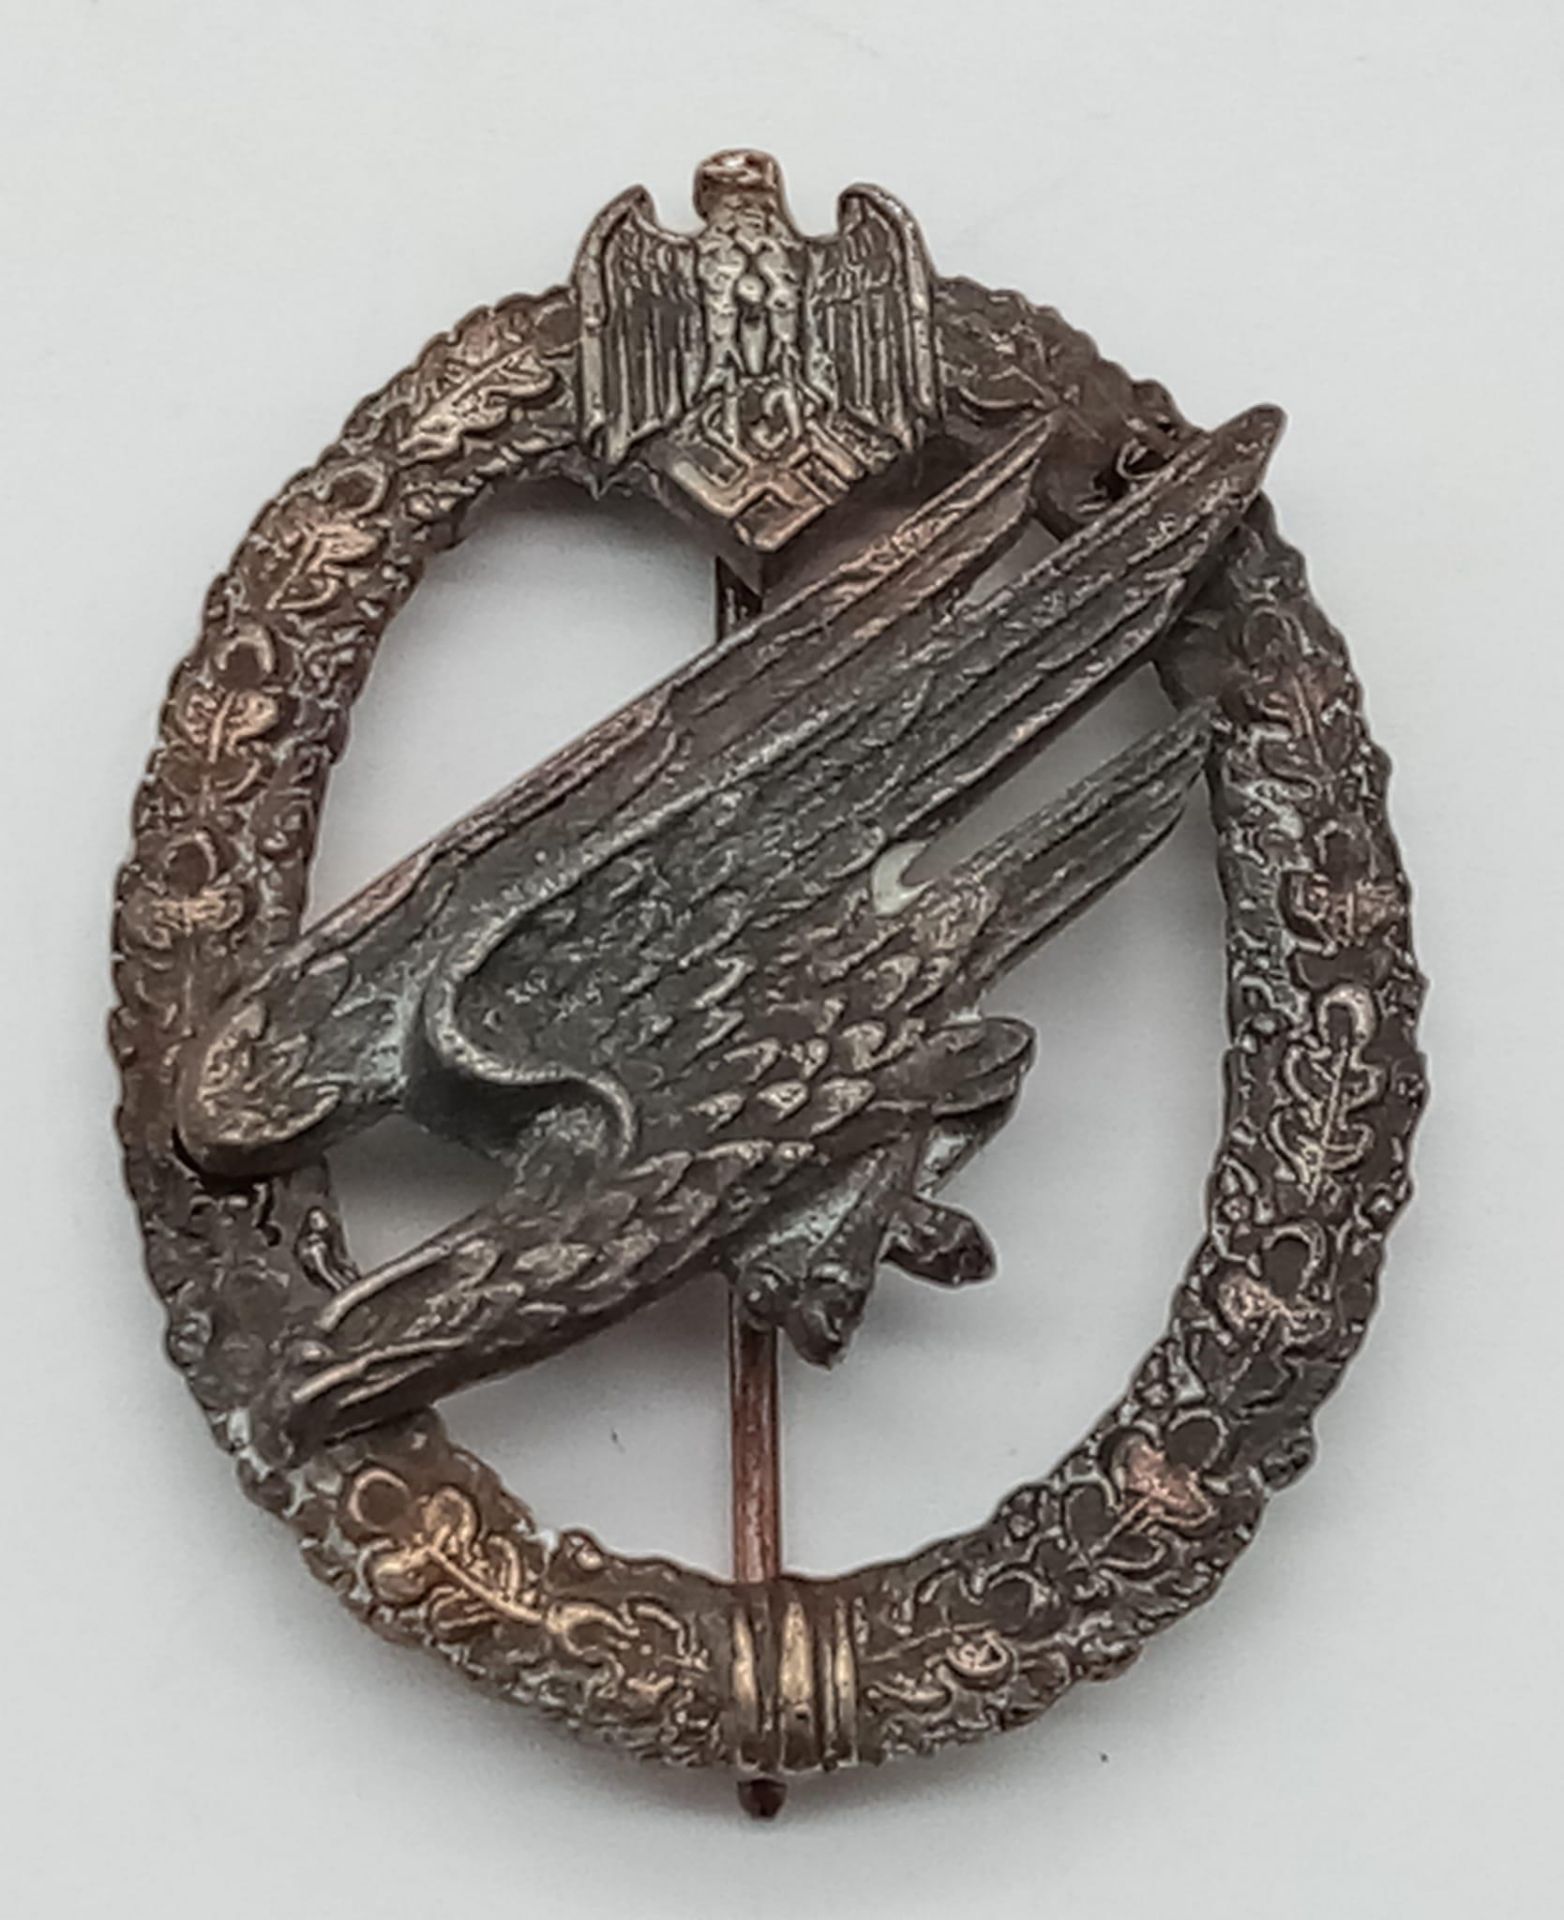 3rd Reich Fallschirmjäger (Army Paratrooper) Qualification Badge. Maker JMME & Sohn Berlin.